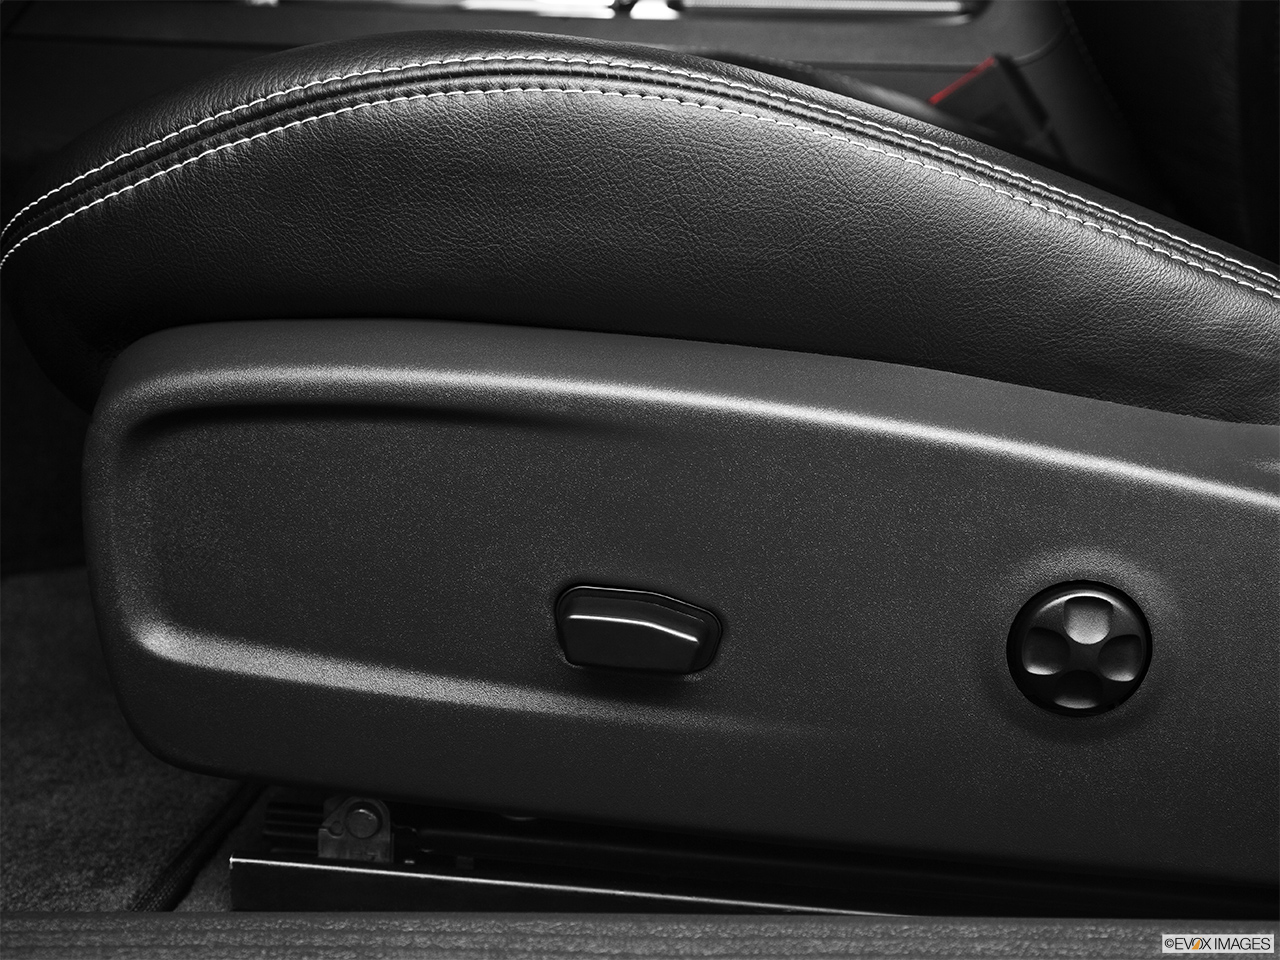 2014 Saleen 570 Challenger Label 570 Black Label Seat Adjustment Controllers. 